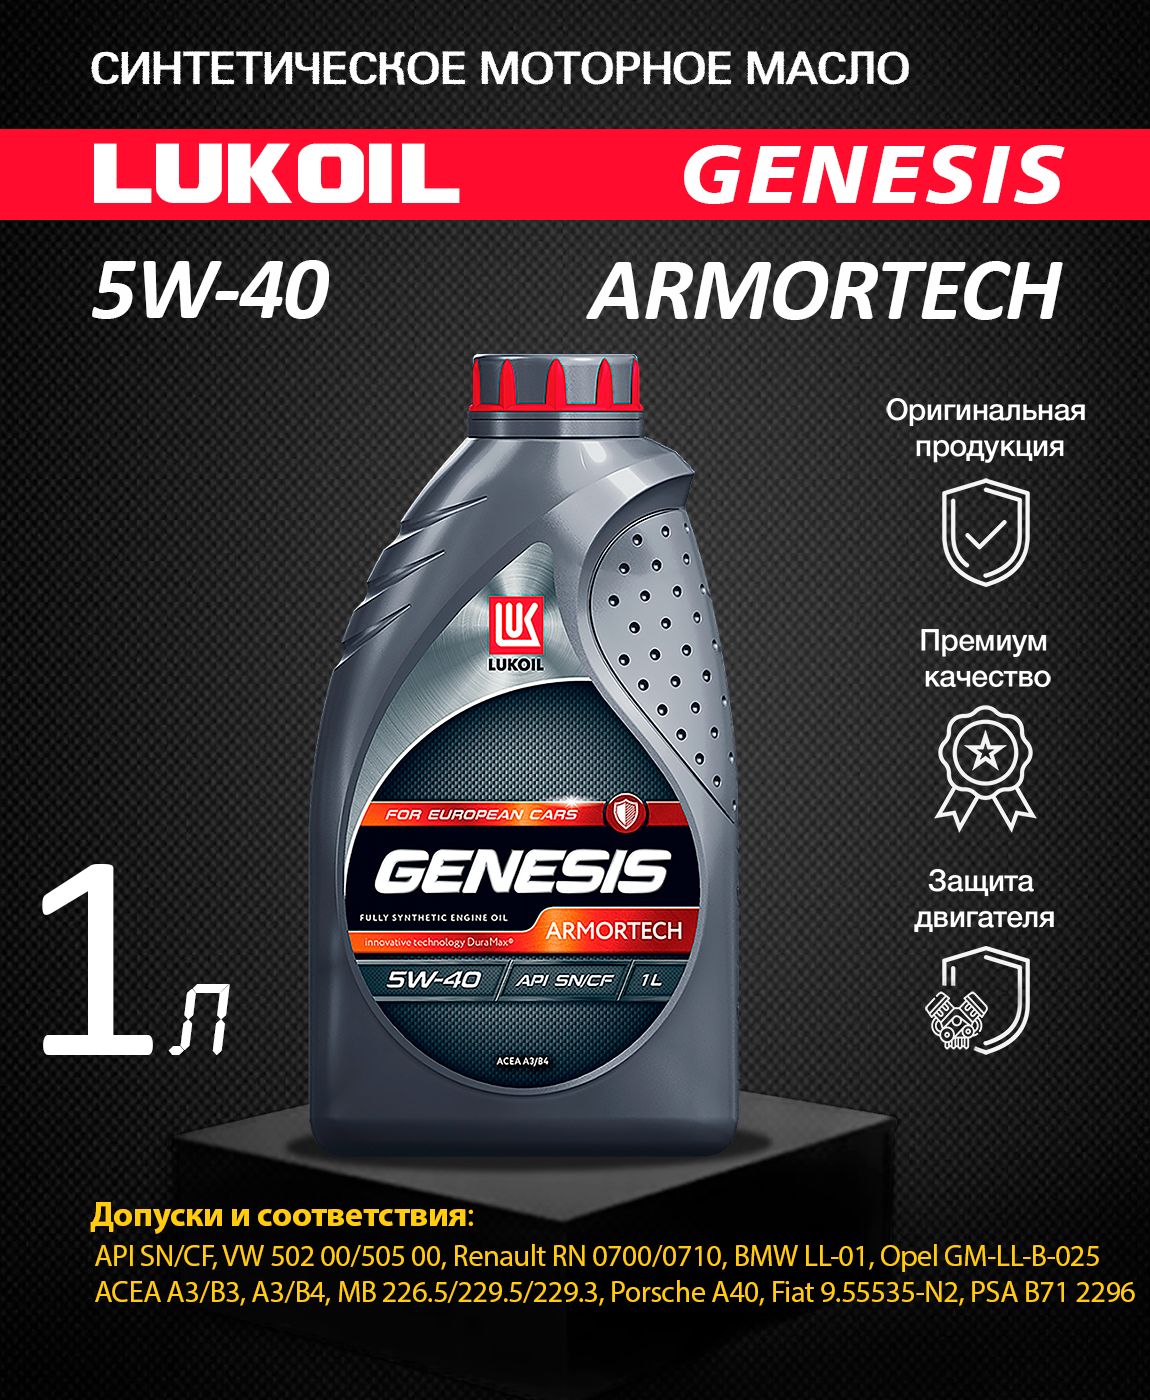 Armortech 5w40 отзывы. Лукойл Genesis Armortech 5w-40 1л. Lukoil Genesis Armortech 5w-40 1л. 1607013 Lukoil Genesis Armortech 5w-40 5л. Genesis Armortech for European cars 5w-40.